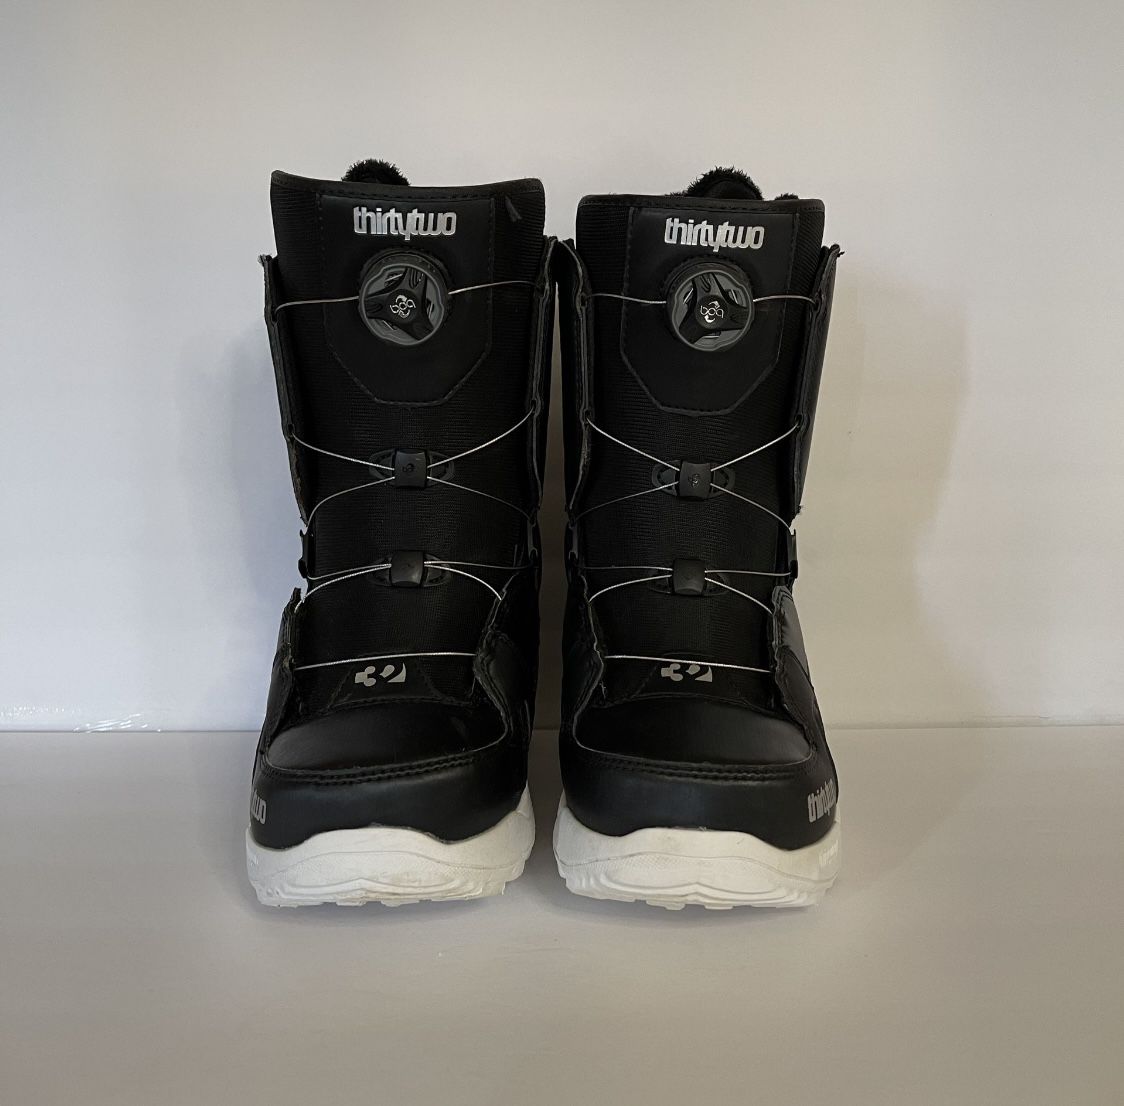 Women’s Snowboard Boots Size 7 ThirtyTwo brand